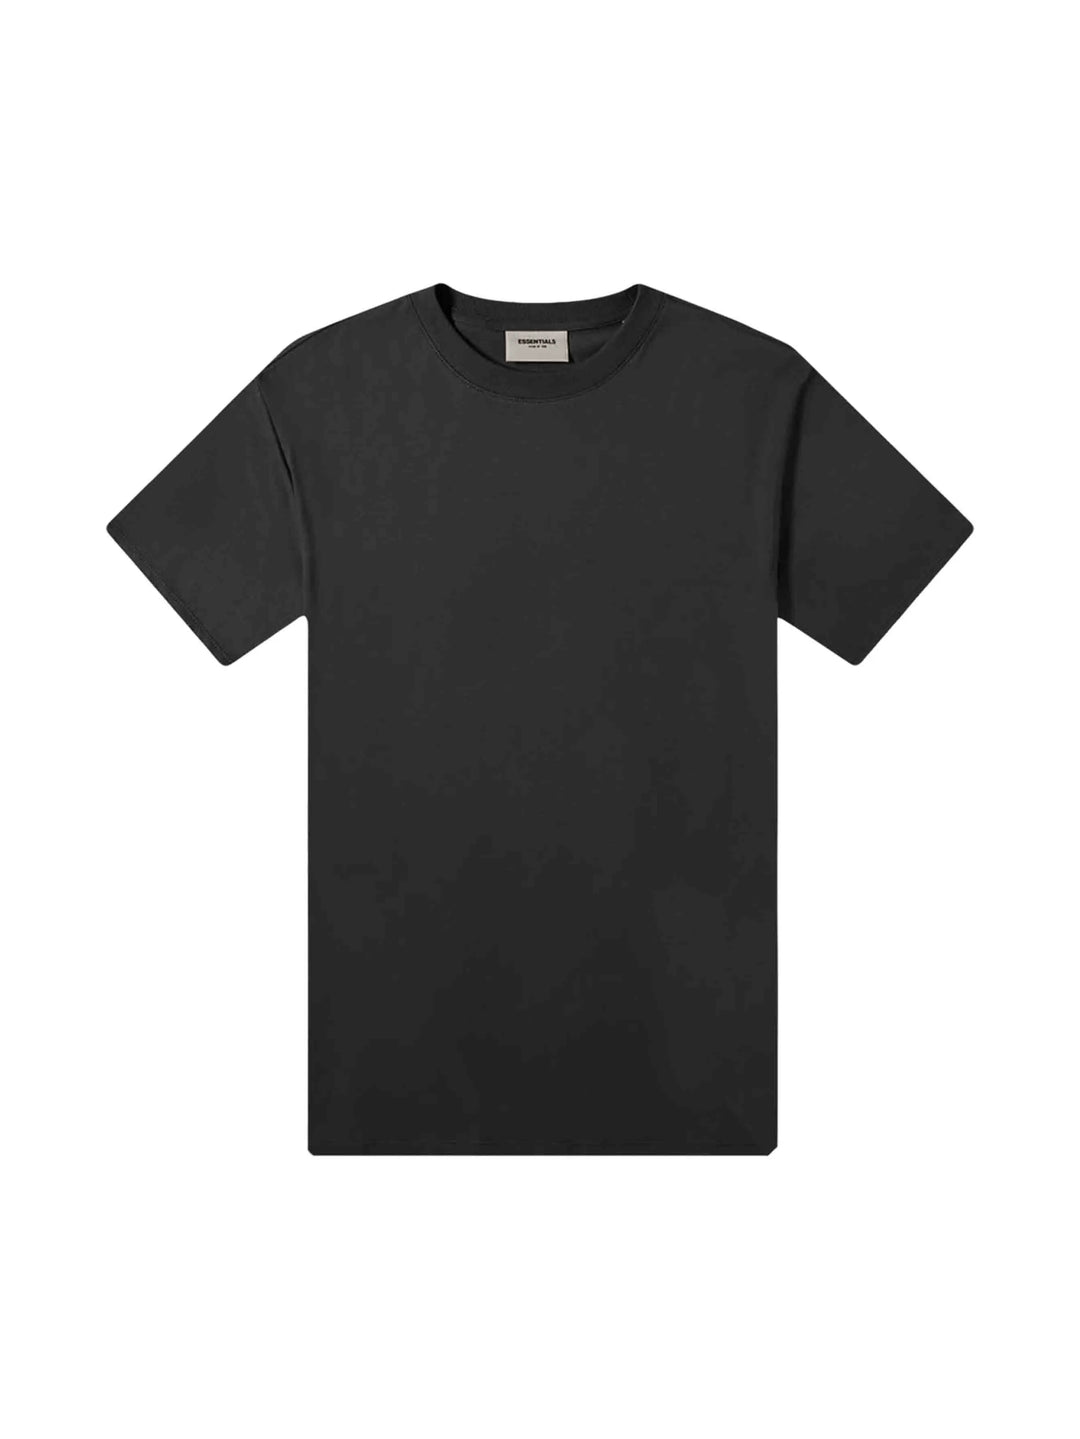 Fear of God Essentials T-shirt Black/Stretch Limo Prior